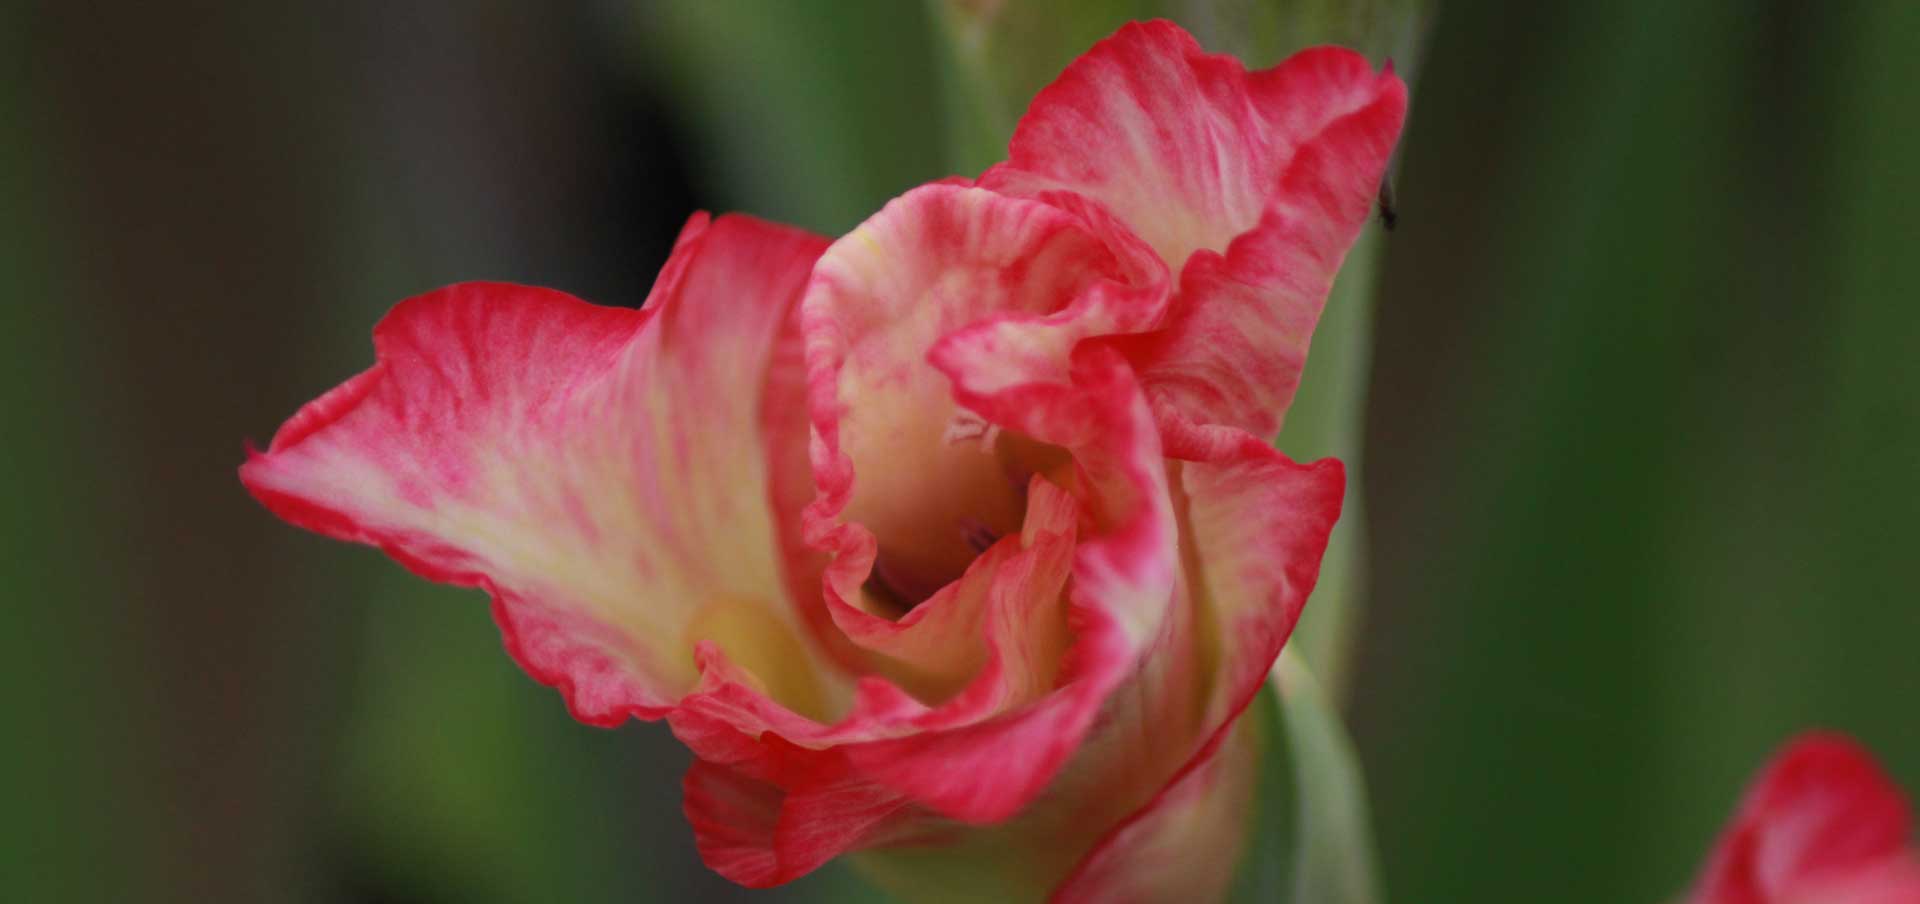 Tacke's Blumenfelder - Gladiolen in Cambs